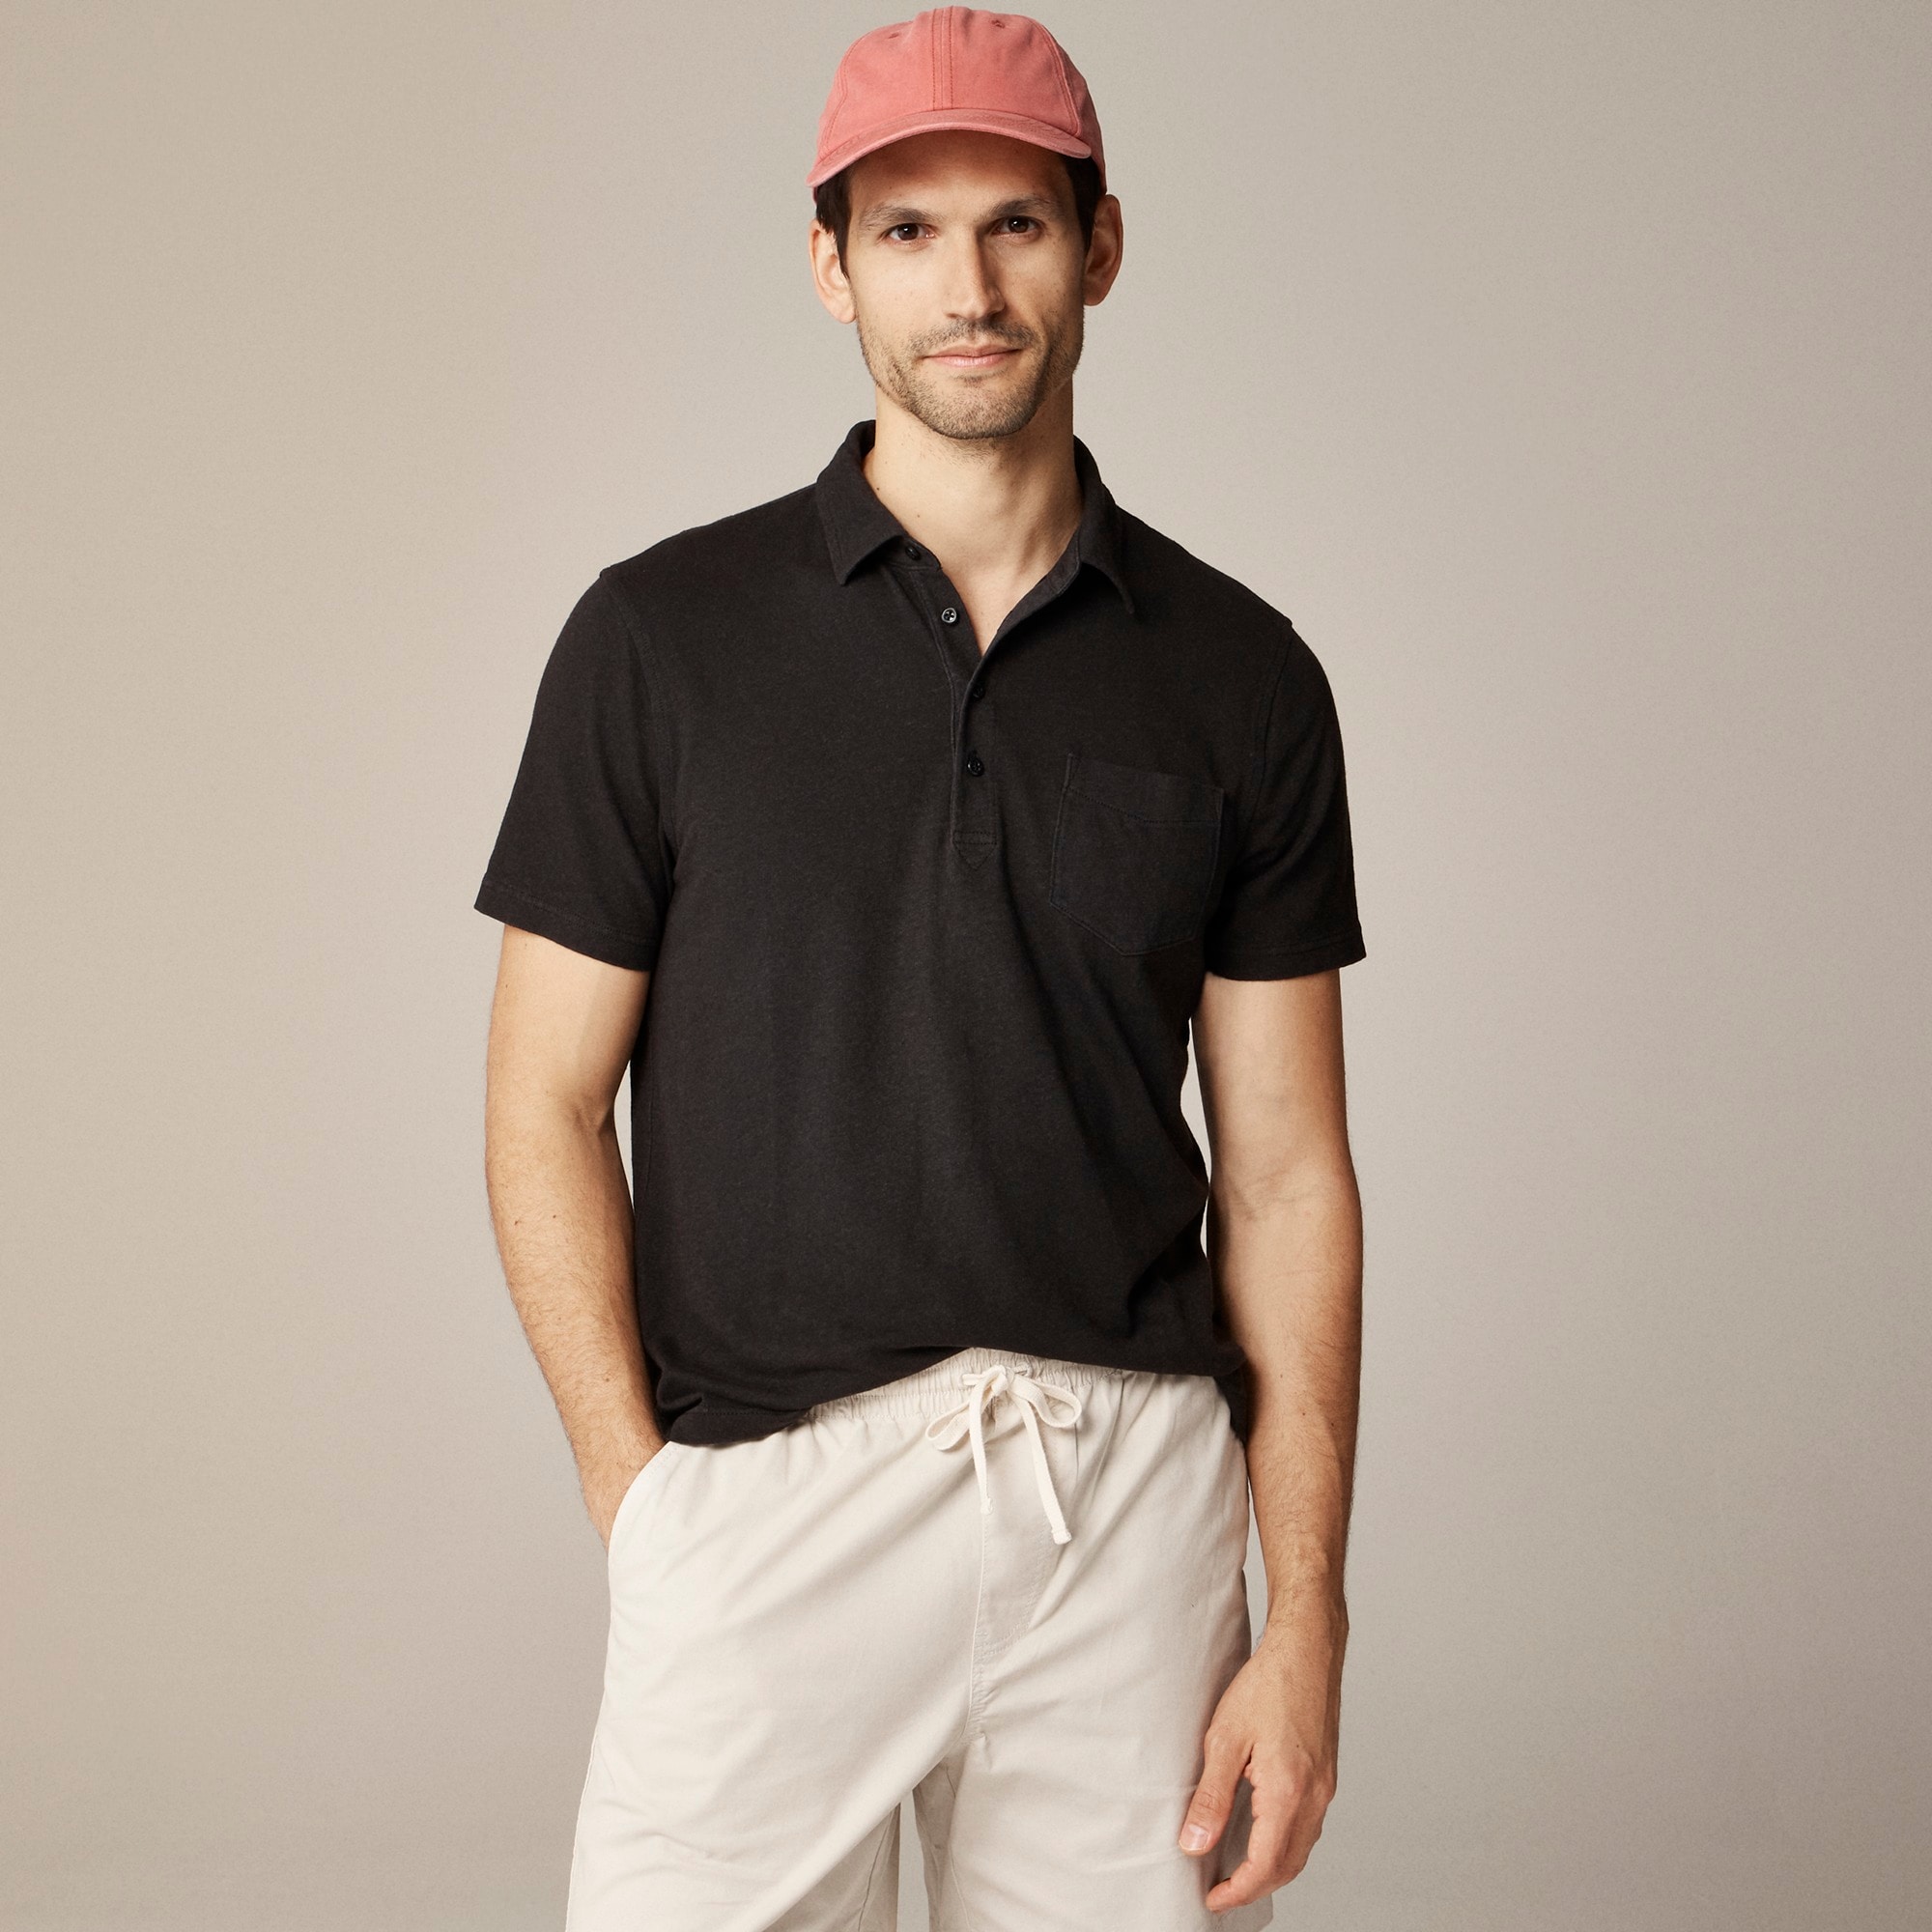 j.crew: hemp-organic cotton blend polo shirt for men